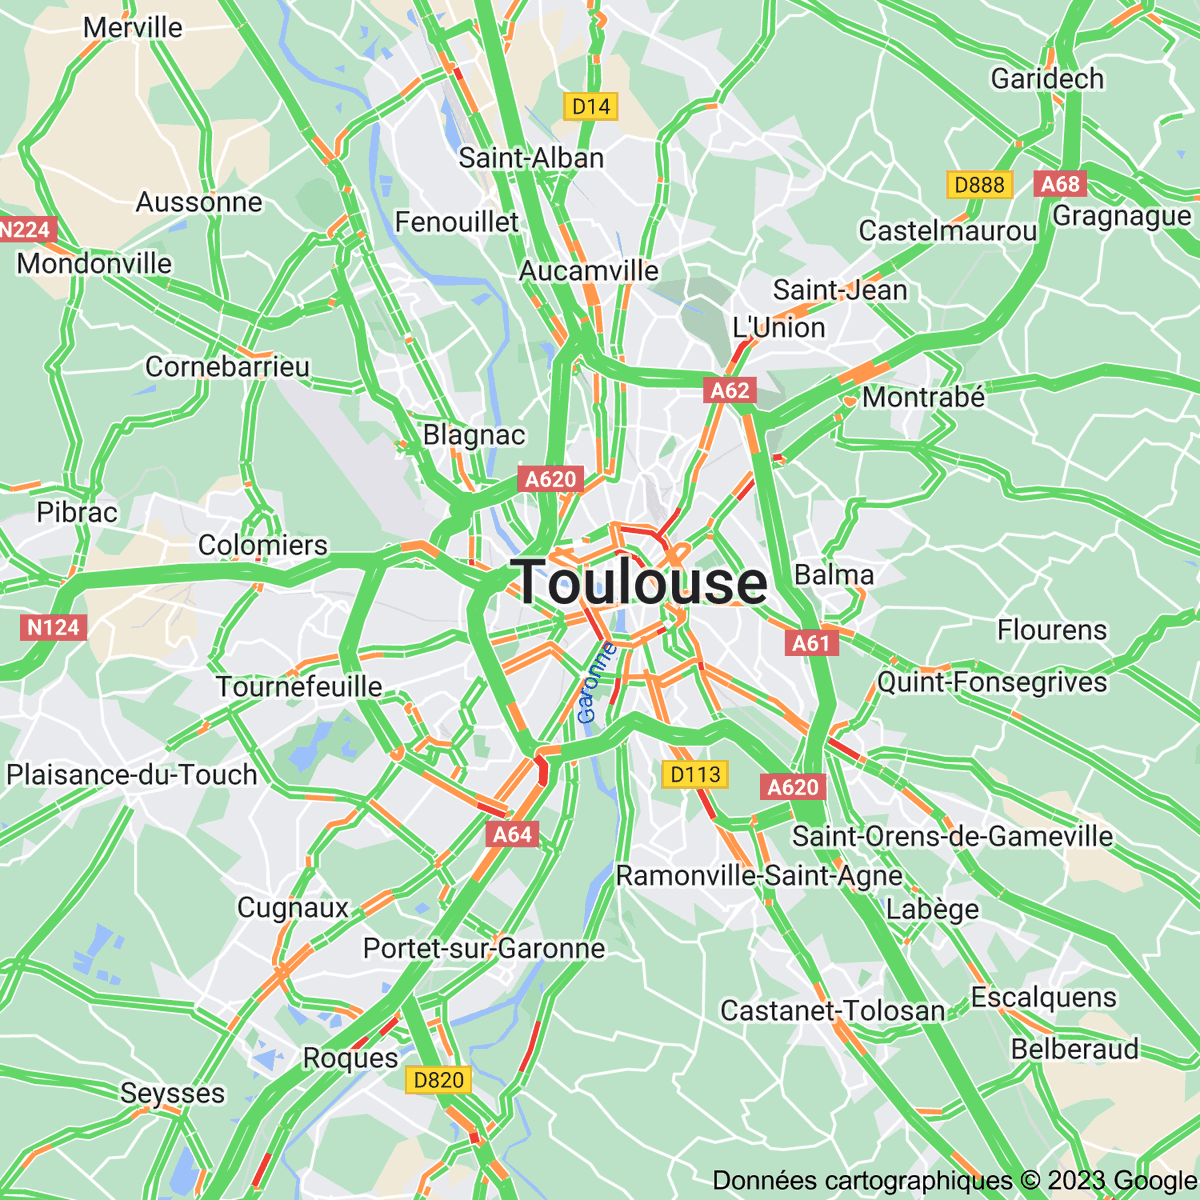 [FLASH 19:30] Trafic à Toulouse toulousetrafic.com #Toulouse #ToulousePeriph #InfoTrafic